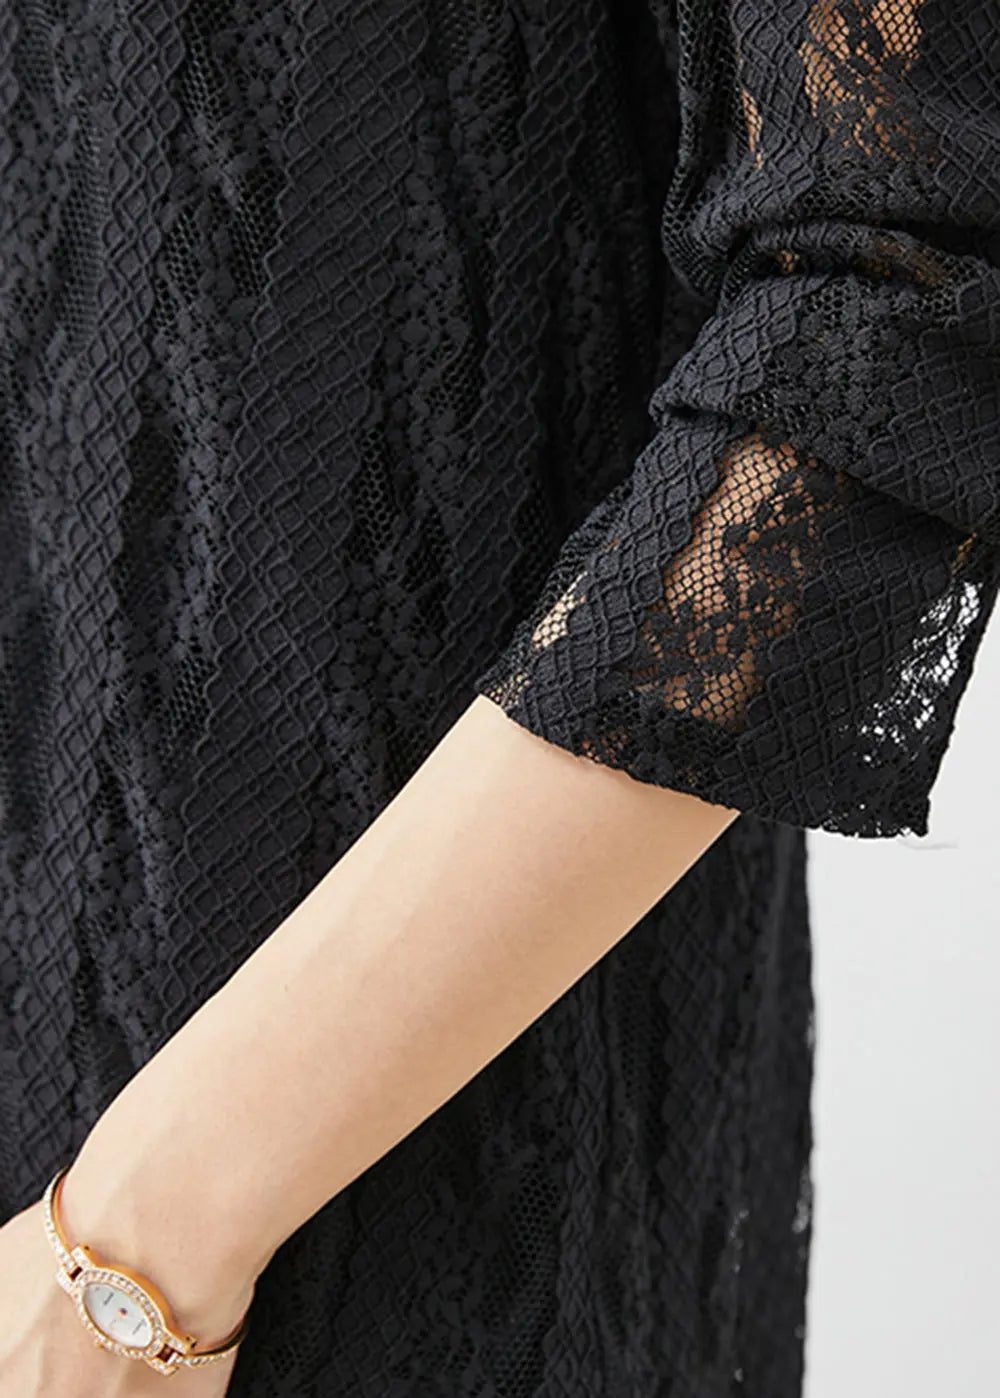 Italian Black Hollow Out Warm Fleece Lace Tops Fall Ada Fashion